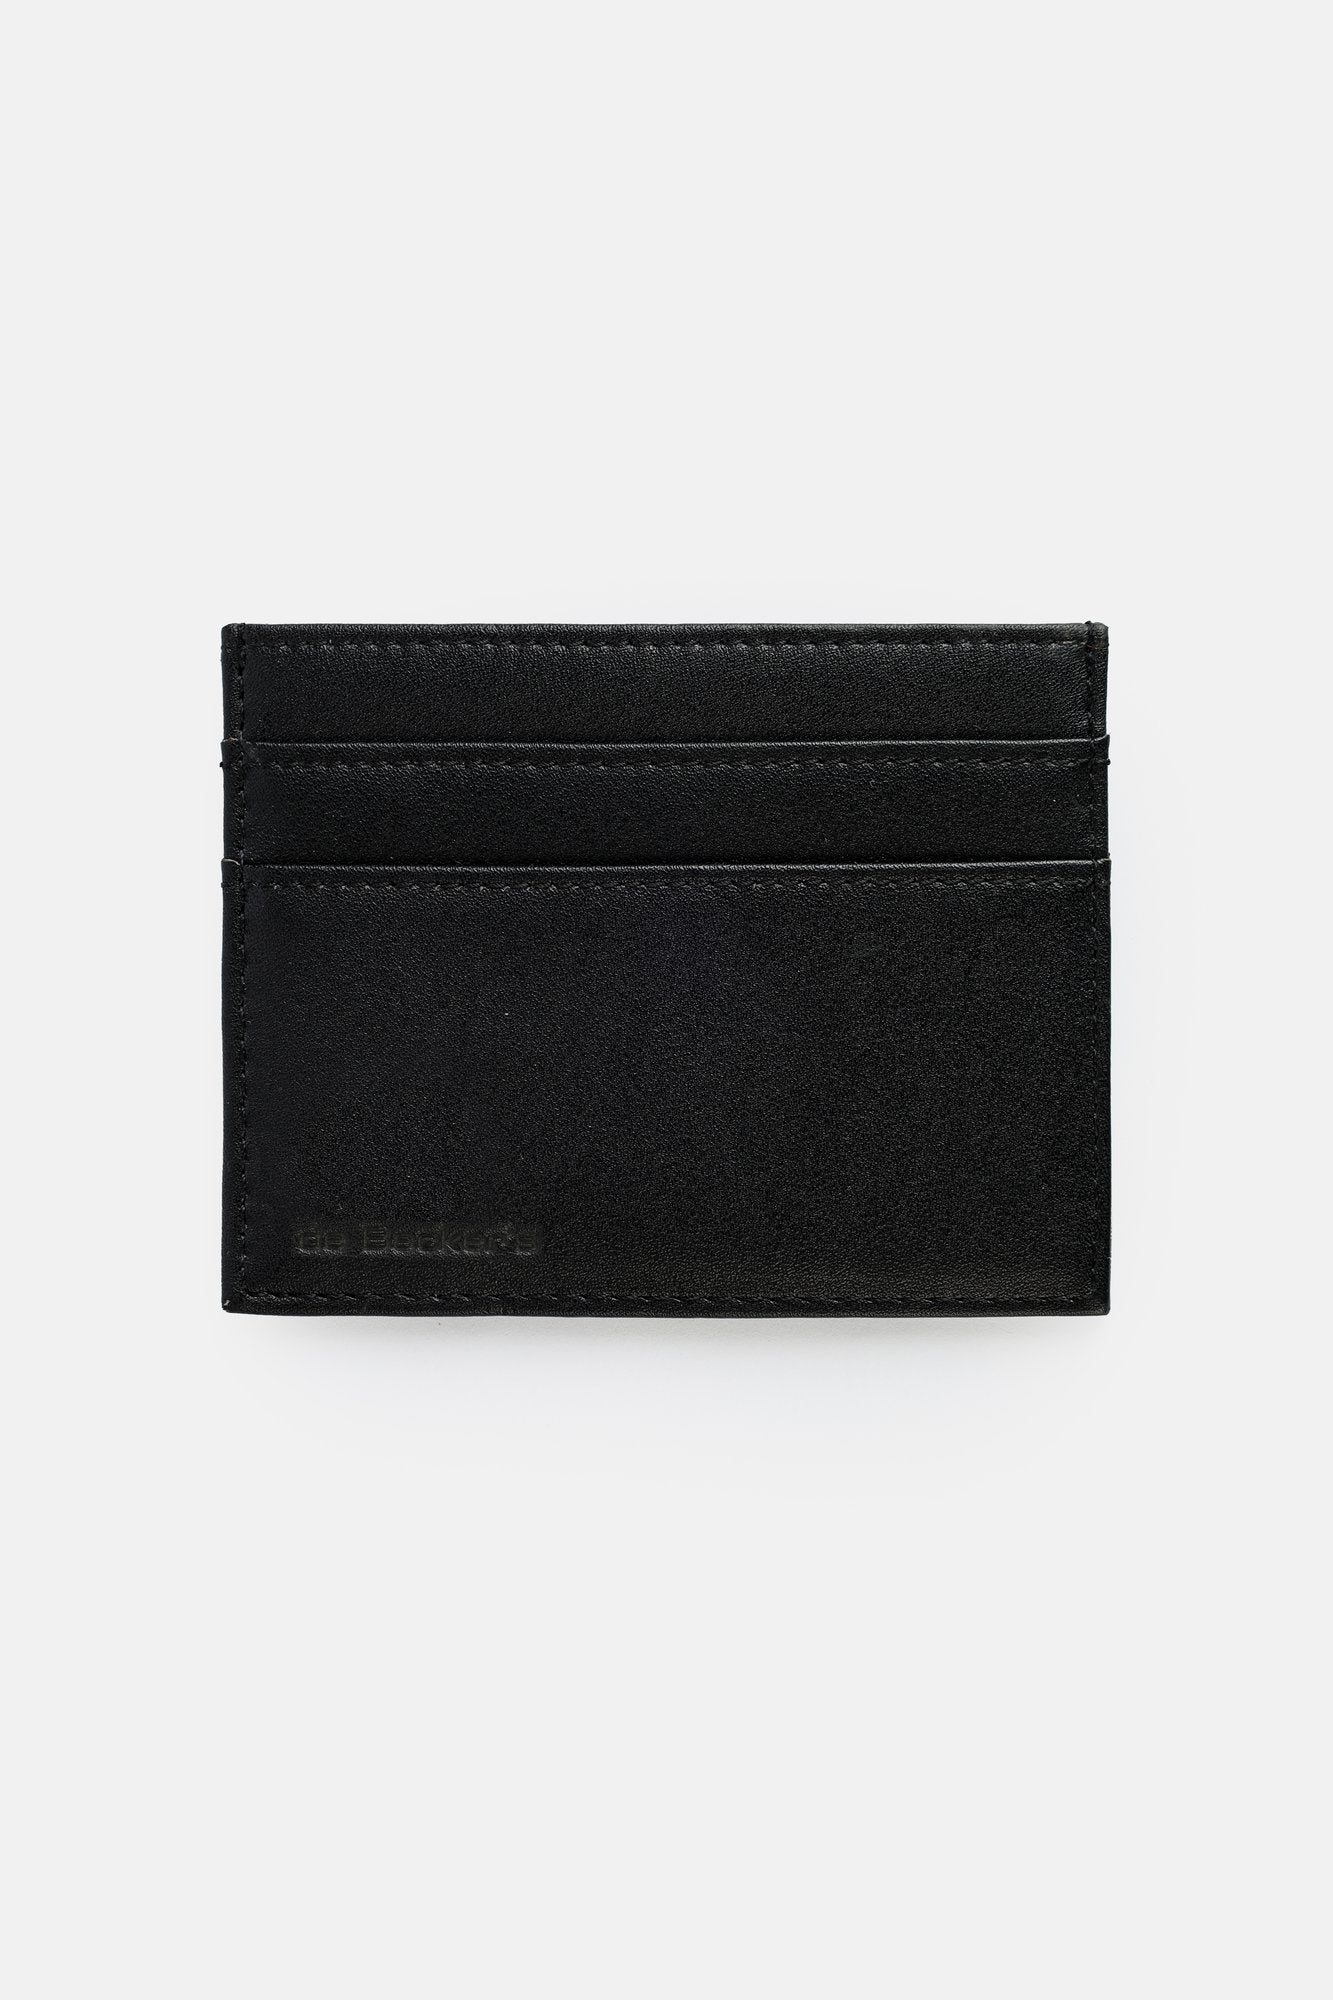 Solid Black Card Case Wallet